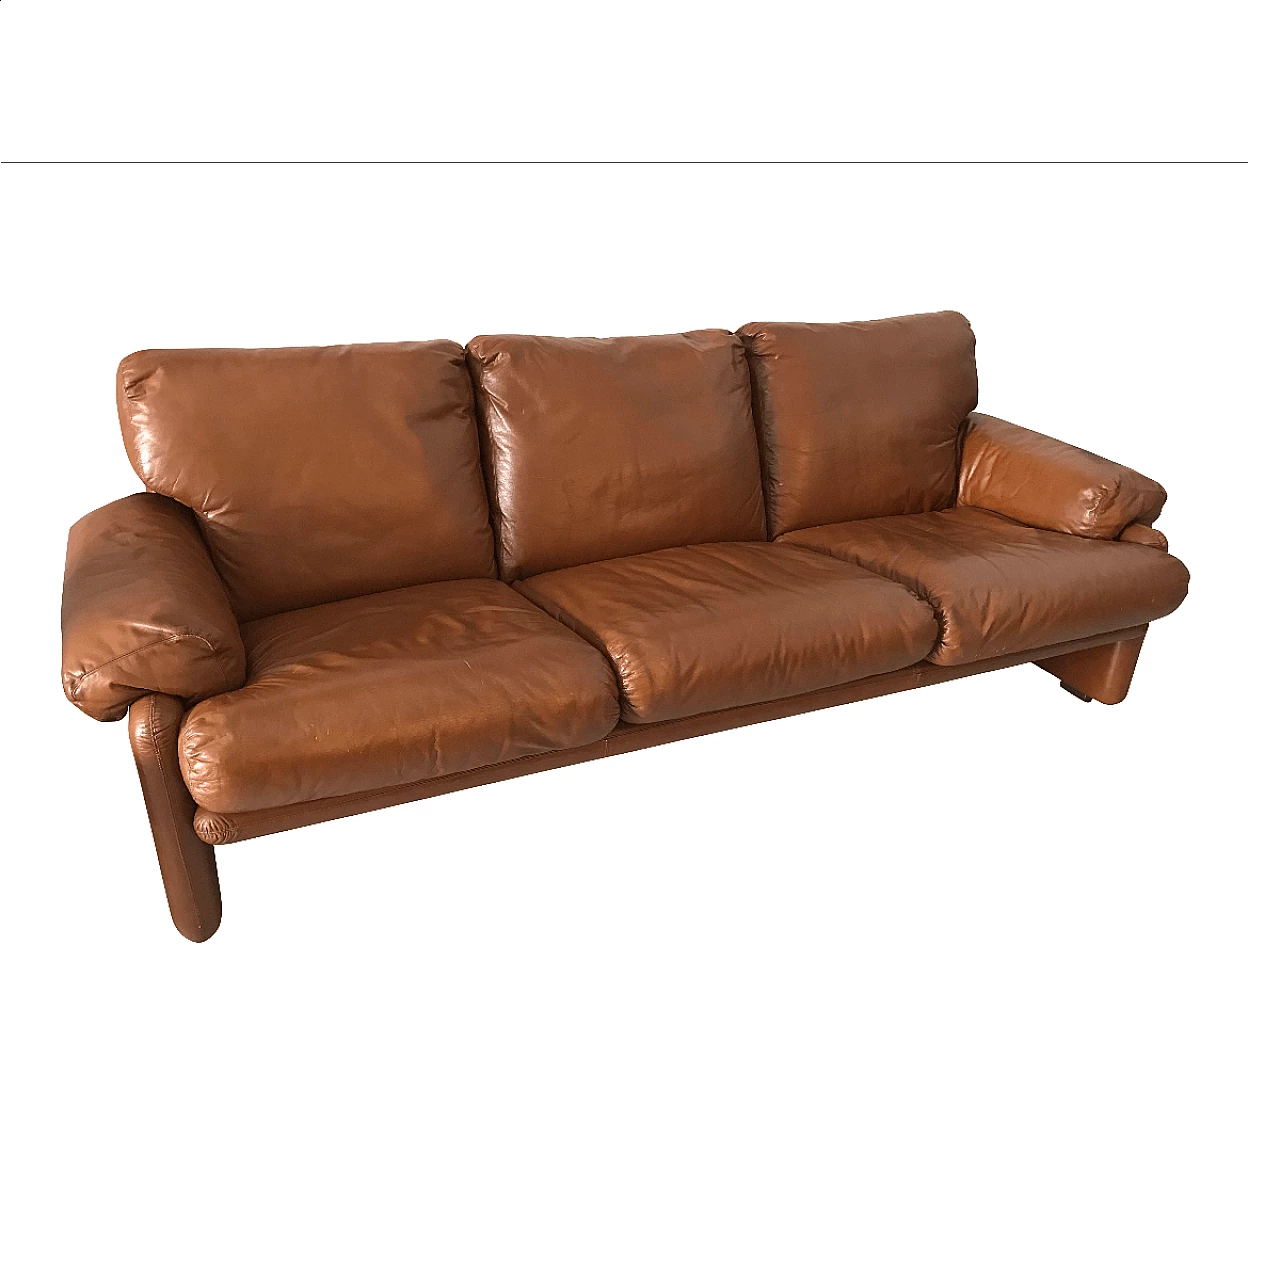 Three seat leather "Coronado" sofa by Afra and Tobia Scarpa for B&B Italia, 1966 1060179